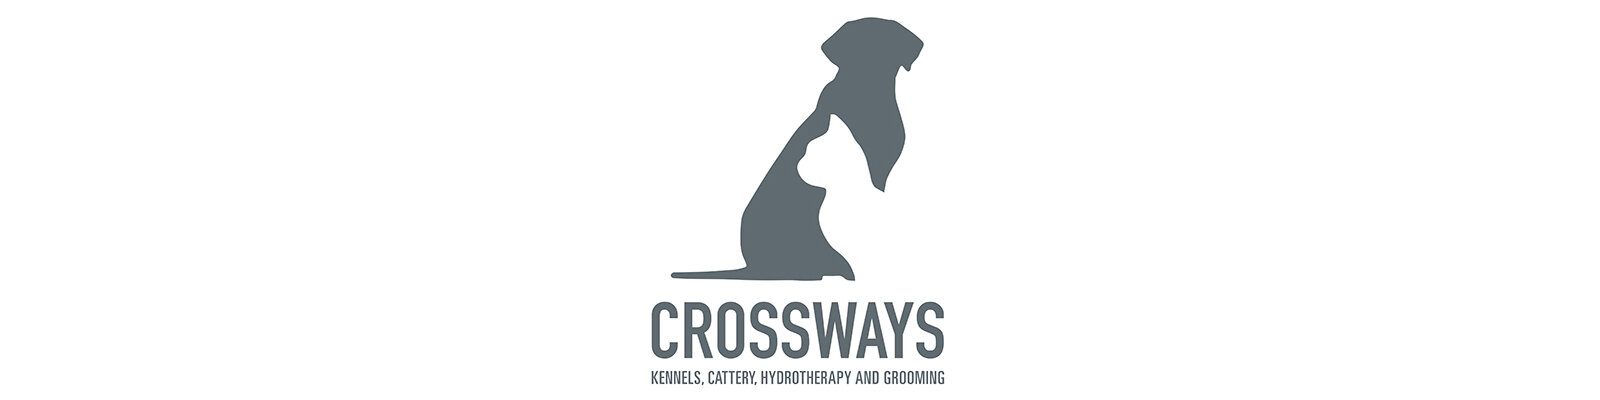 Crossways-Logo.jpg